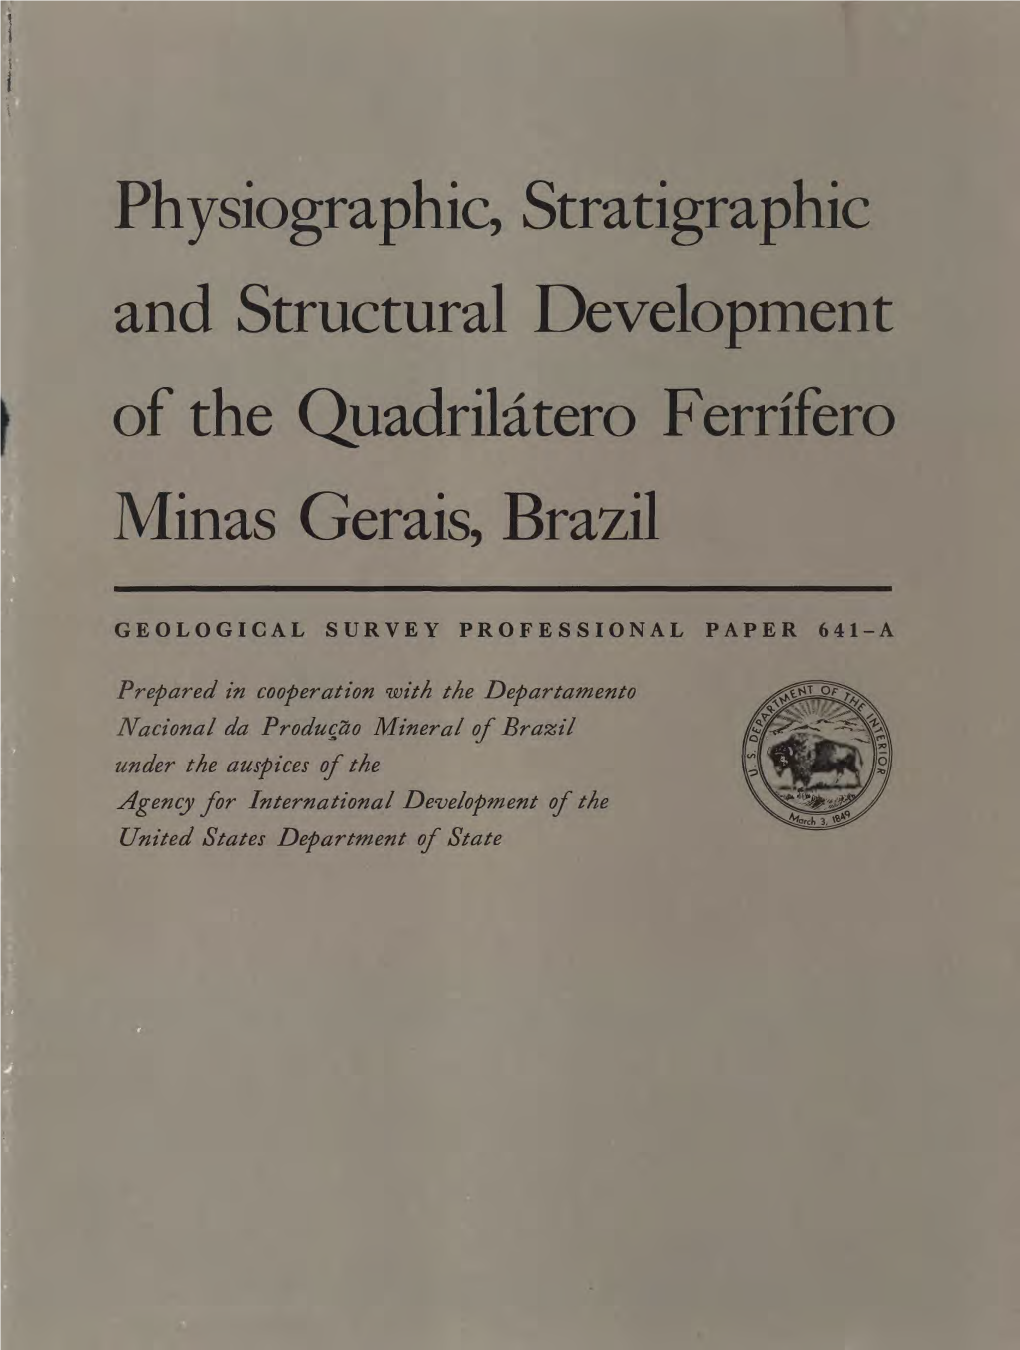 Physiographic, Stratigraphic and Structural Development of the Quadrilatero Ferrifero Minas Gerais, Brazil